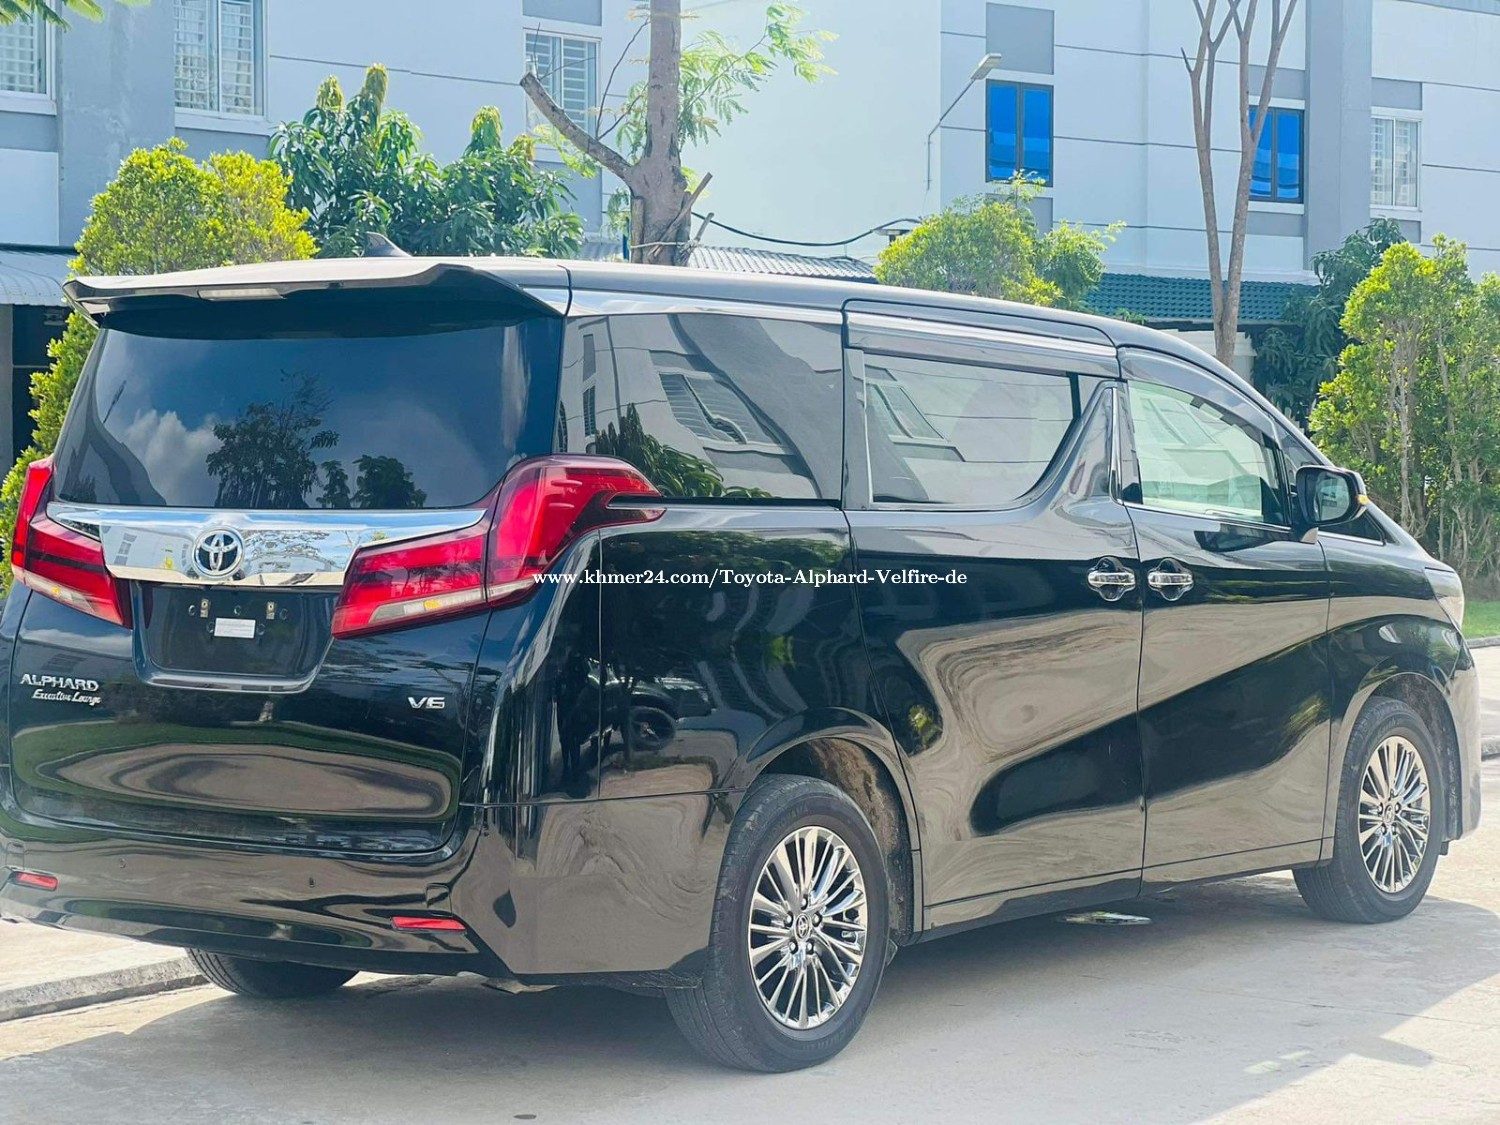 Toyota Alphard 2019 Executive Lounge 283245170442643227084896 H 